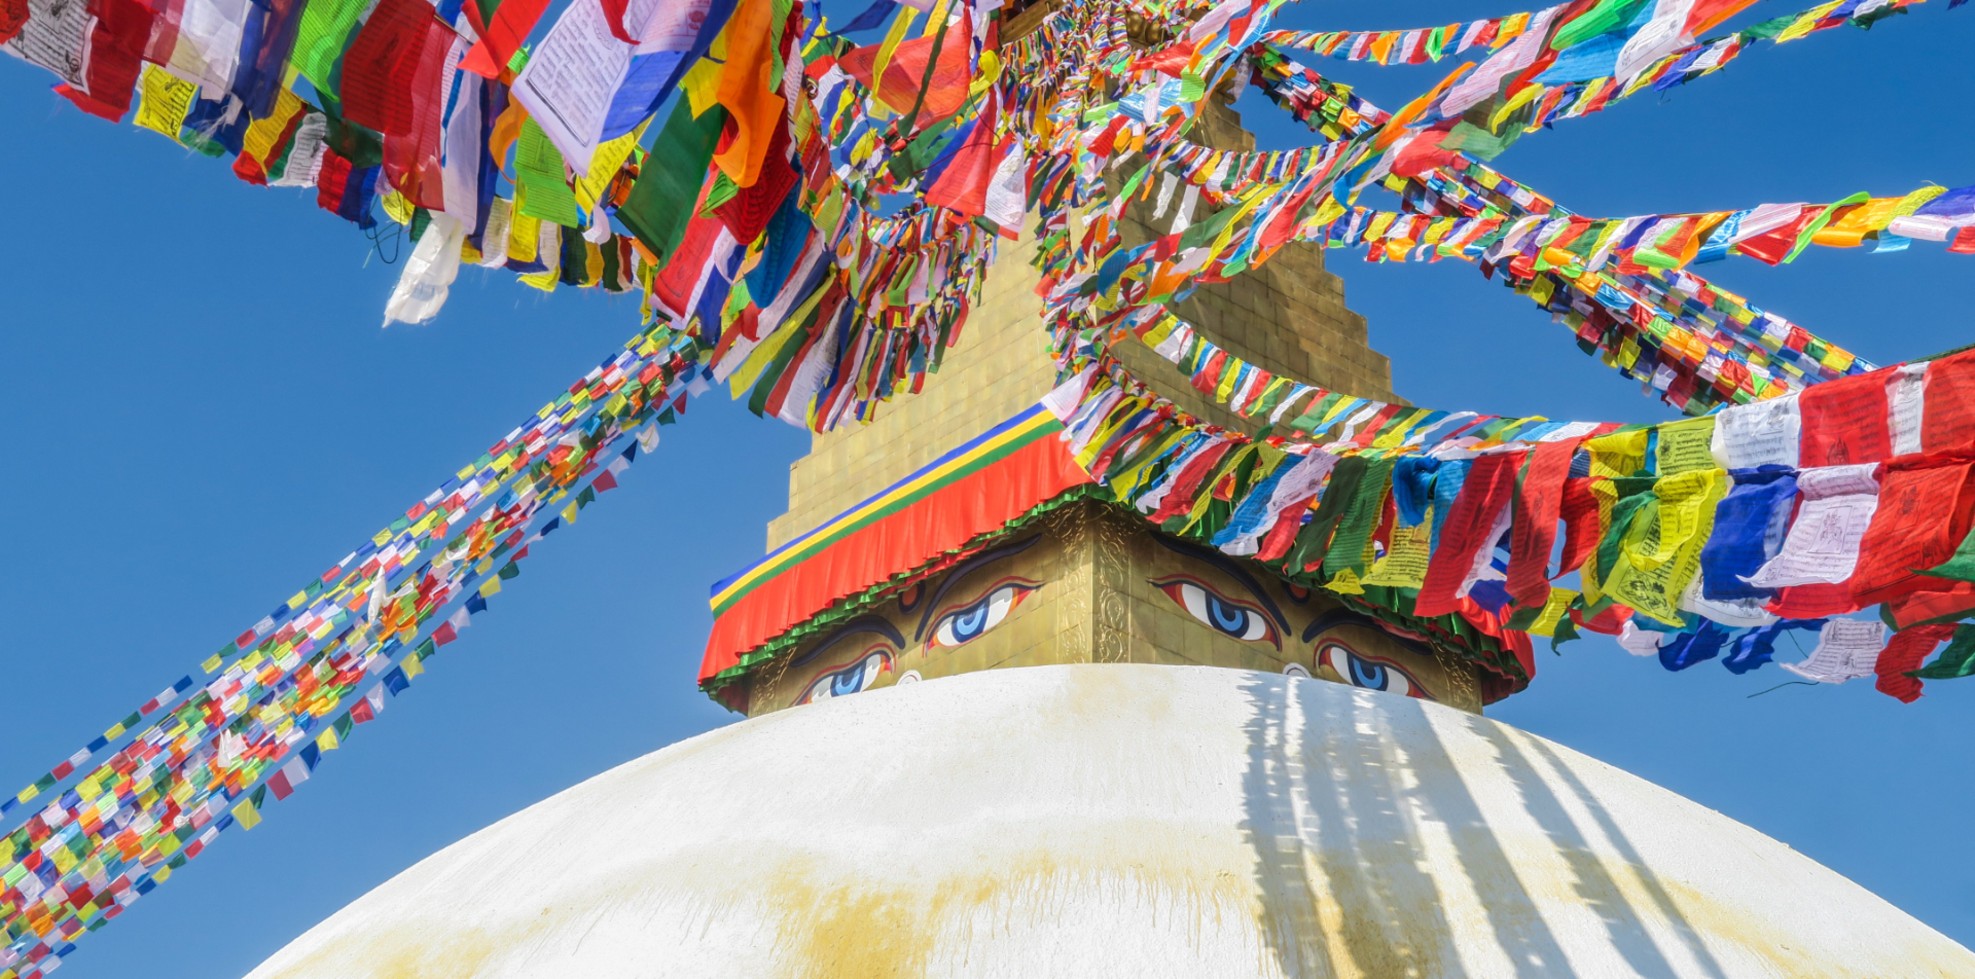 Nepal Tibet Bhutan Cultural Tour (Luxury Trip)